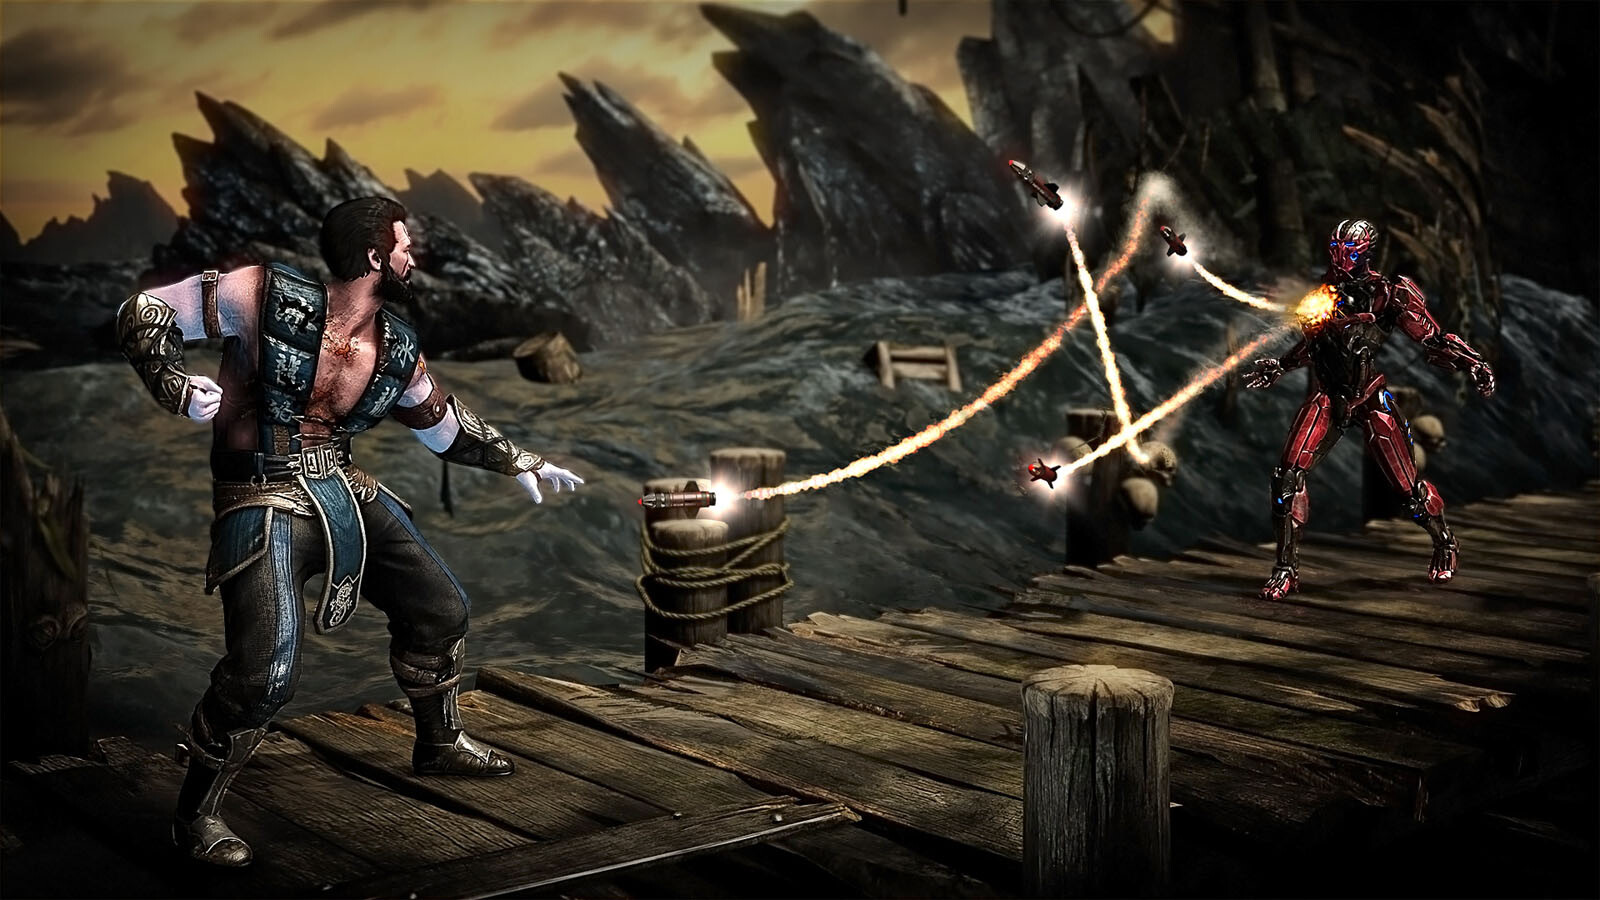 Mortal Kombat X Kombat Pack 2 Steam Key for PC - Buy now